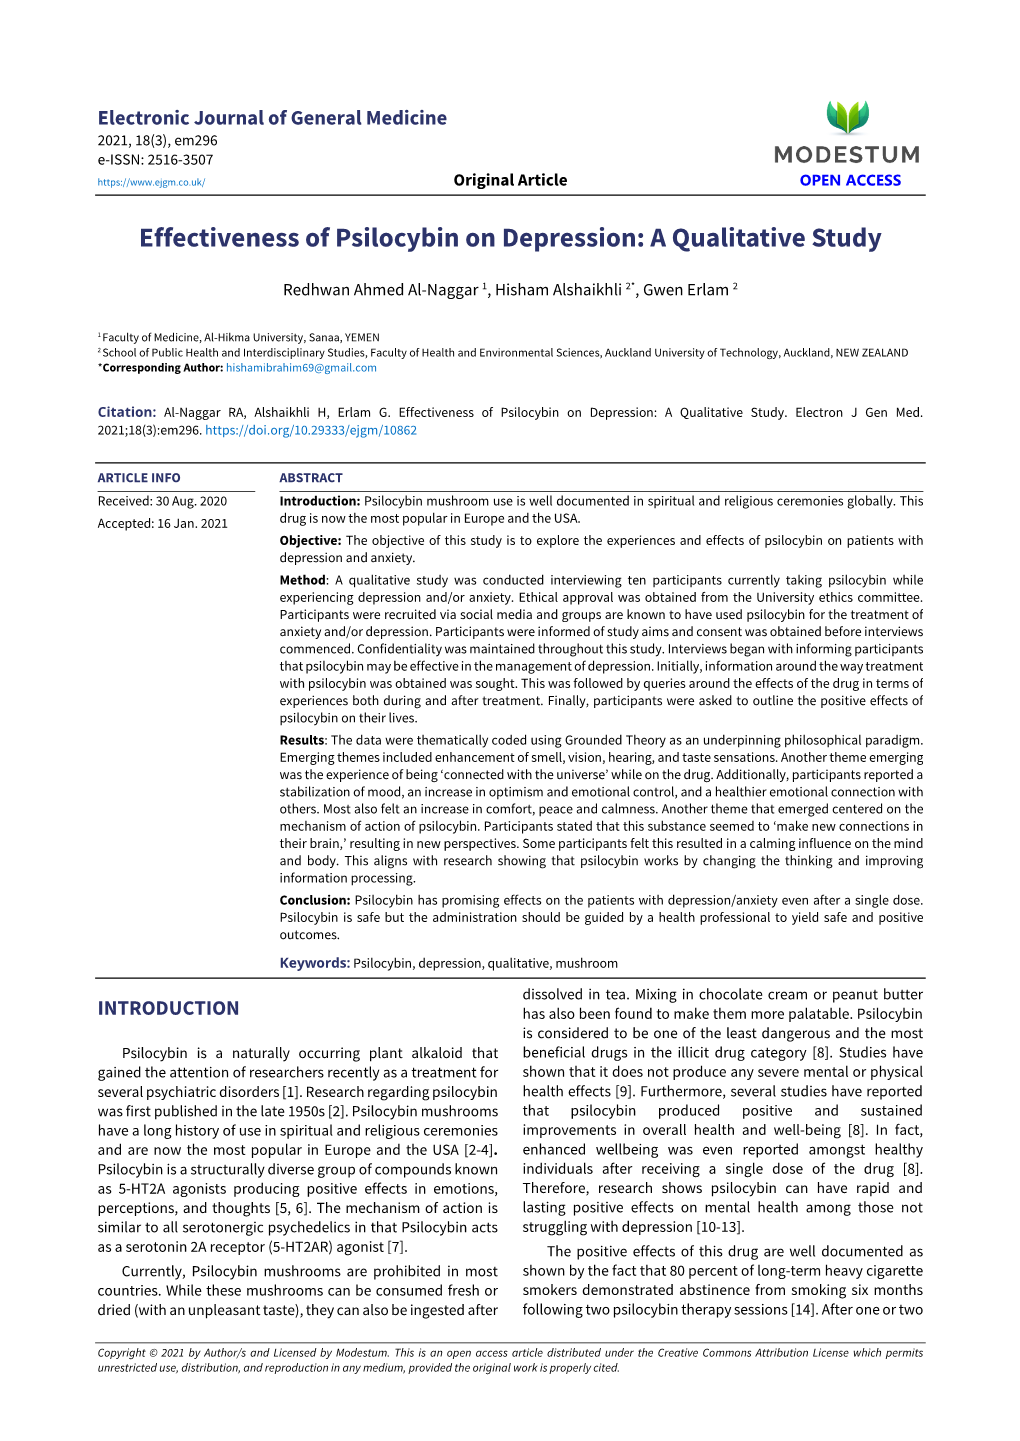 Effectiveness of Psilocybin on Depression: a Qualitative Study